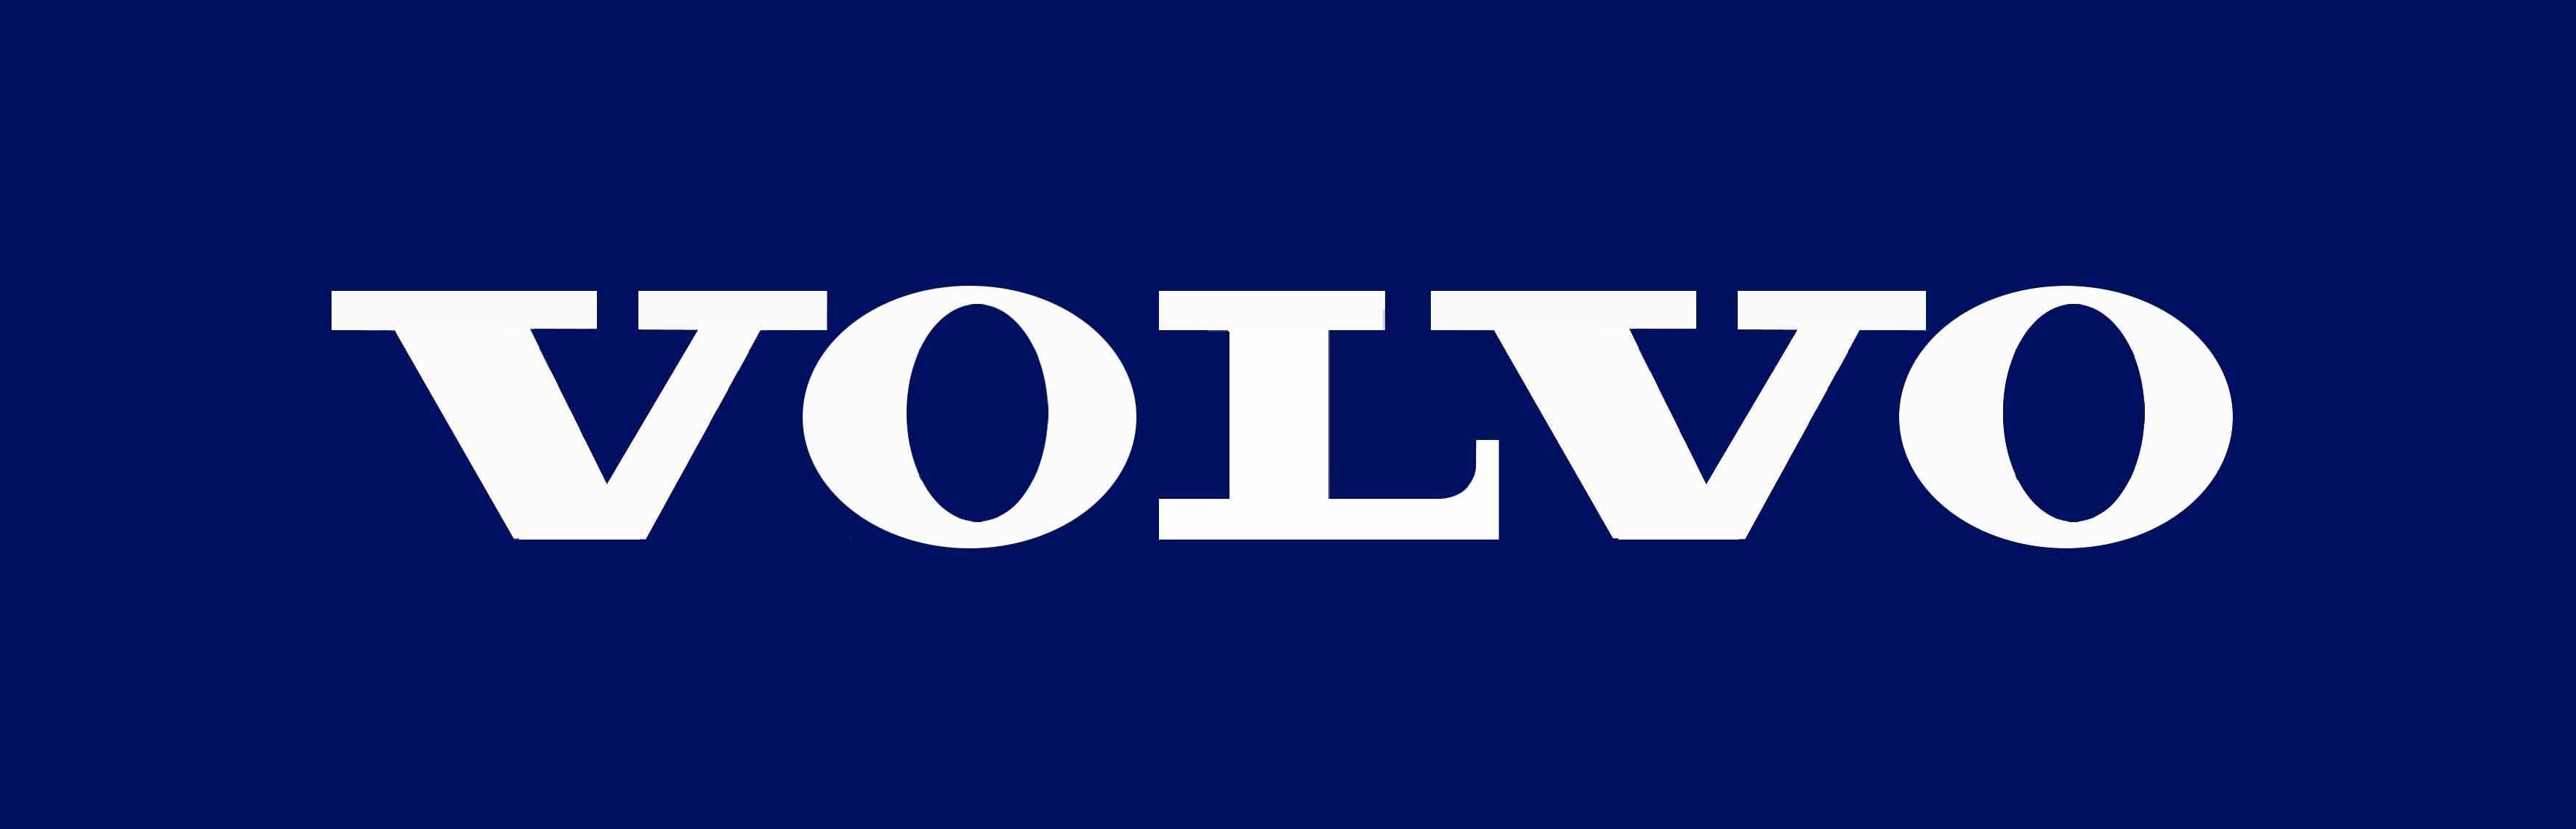 Wne Logo - Volvo Logo Wallpaper For Android #Wne. Cars. Volvo, Cars, Volvo v40